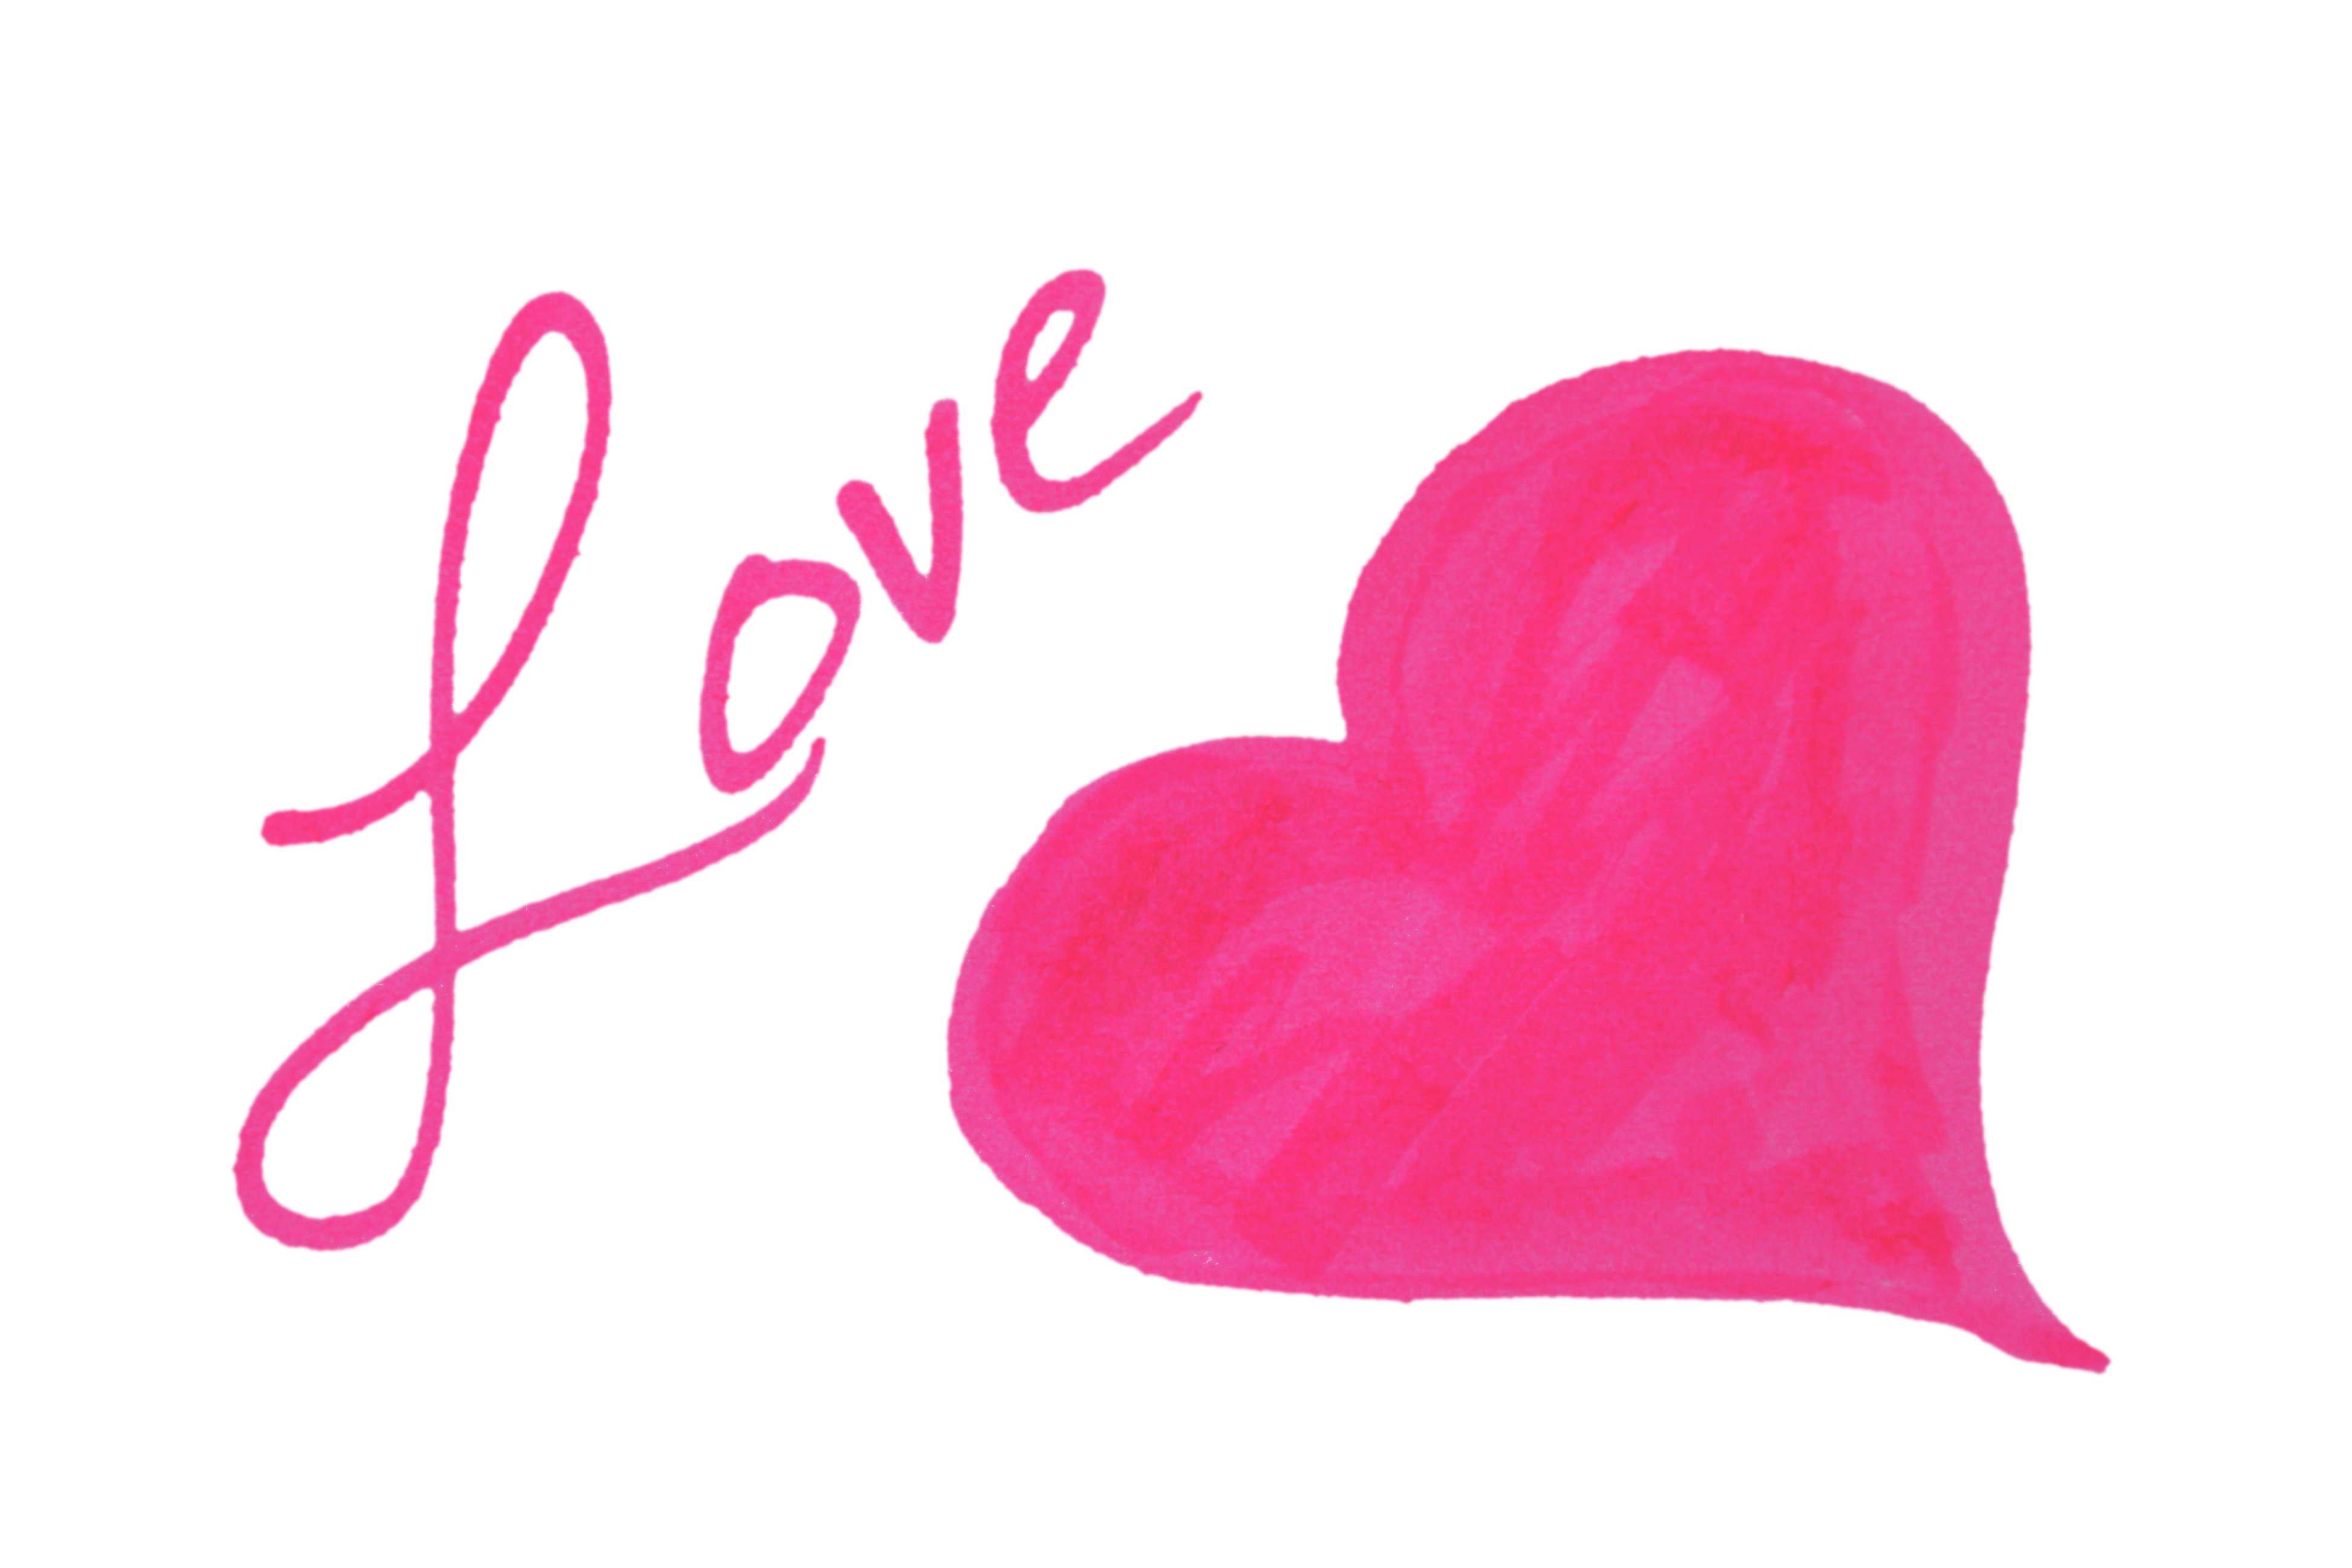 Love Heart Clip Art Picture, Free Photograph